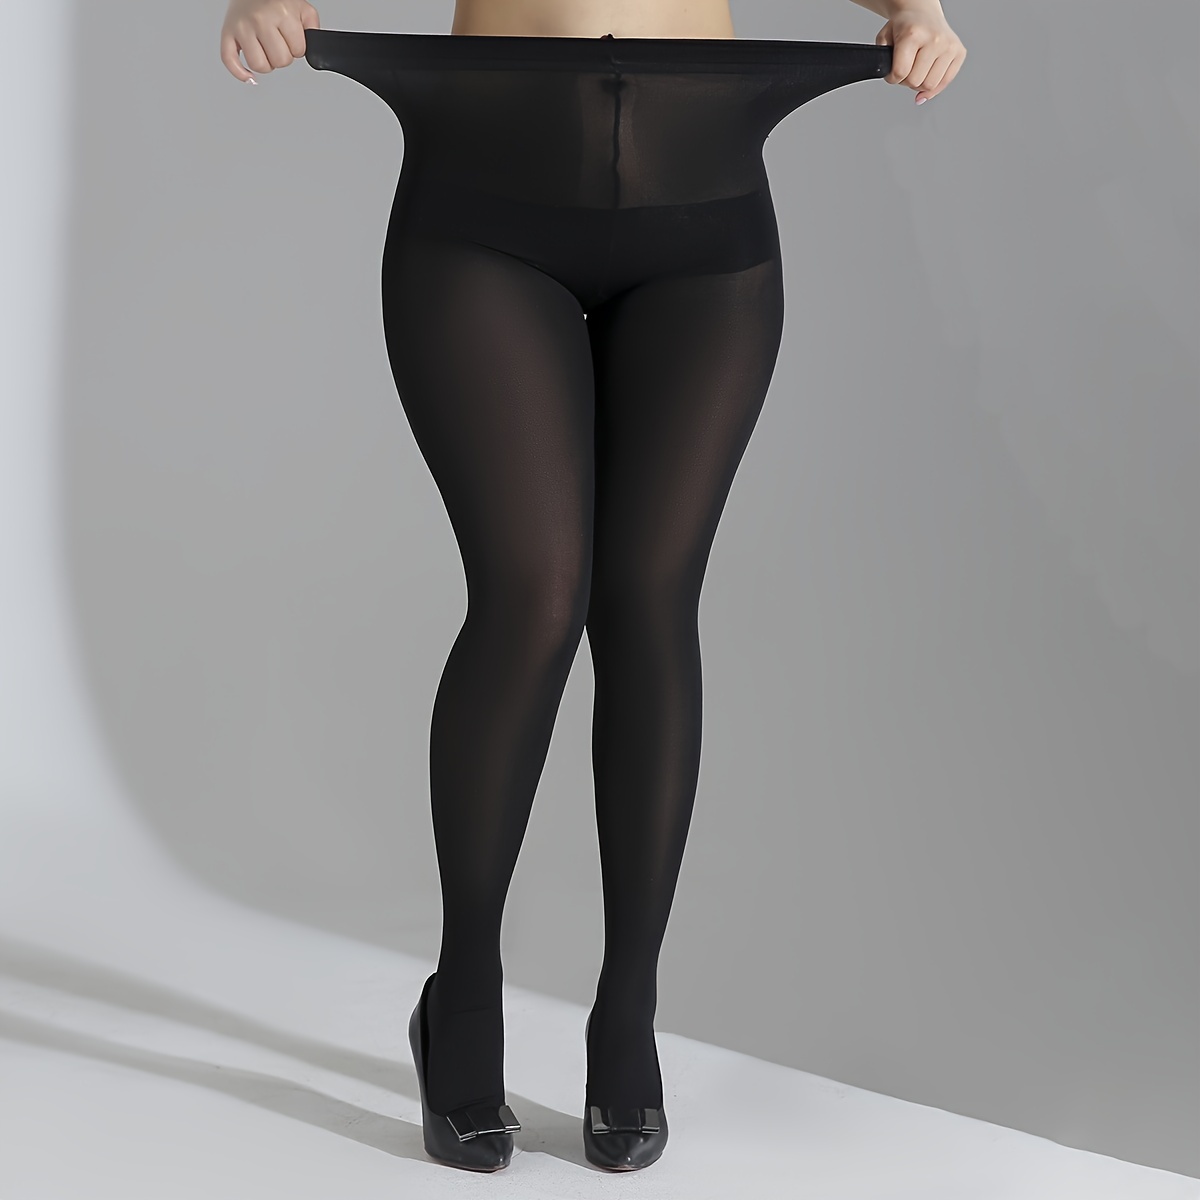 1pair Women's Splicing Sheer Black Stockings, Tights, Pantyhose